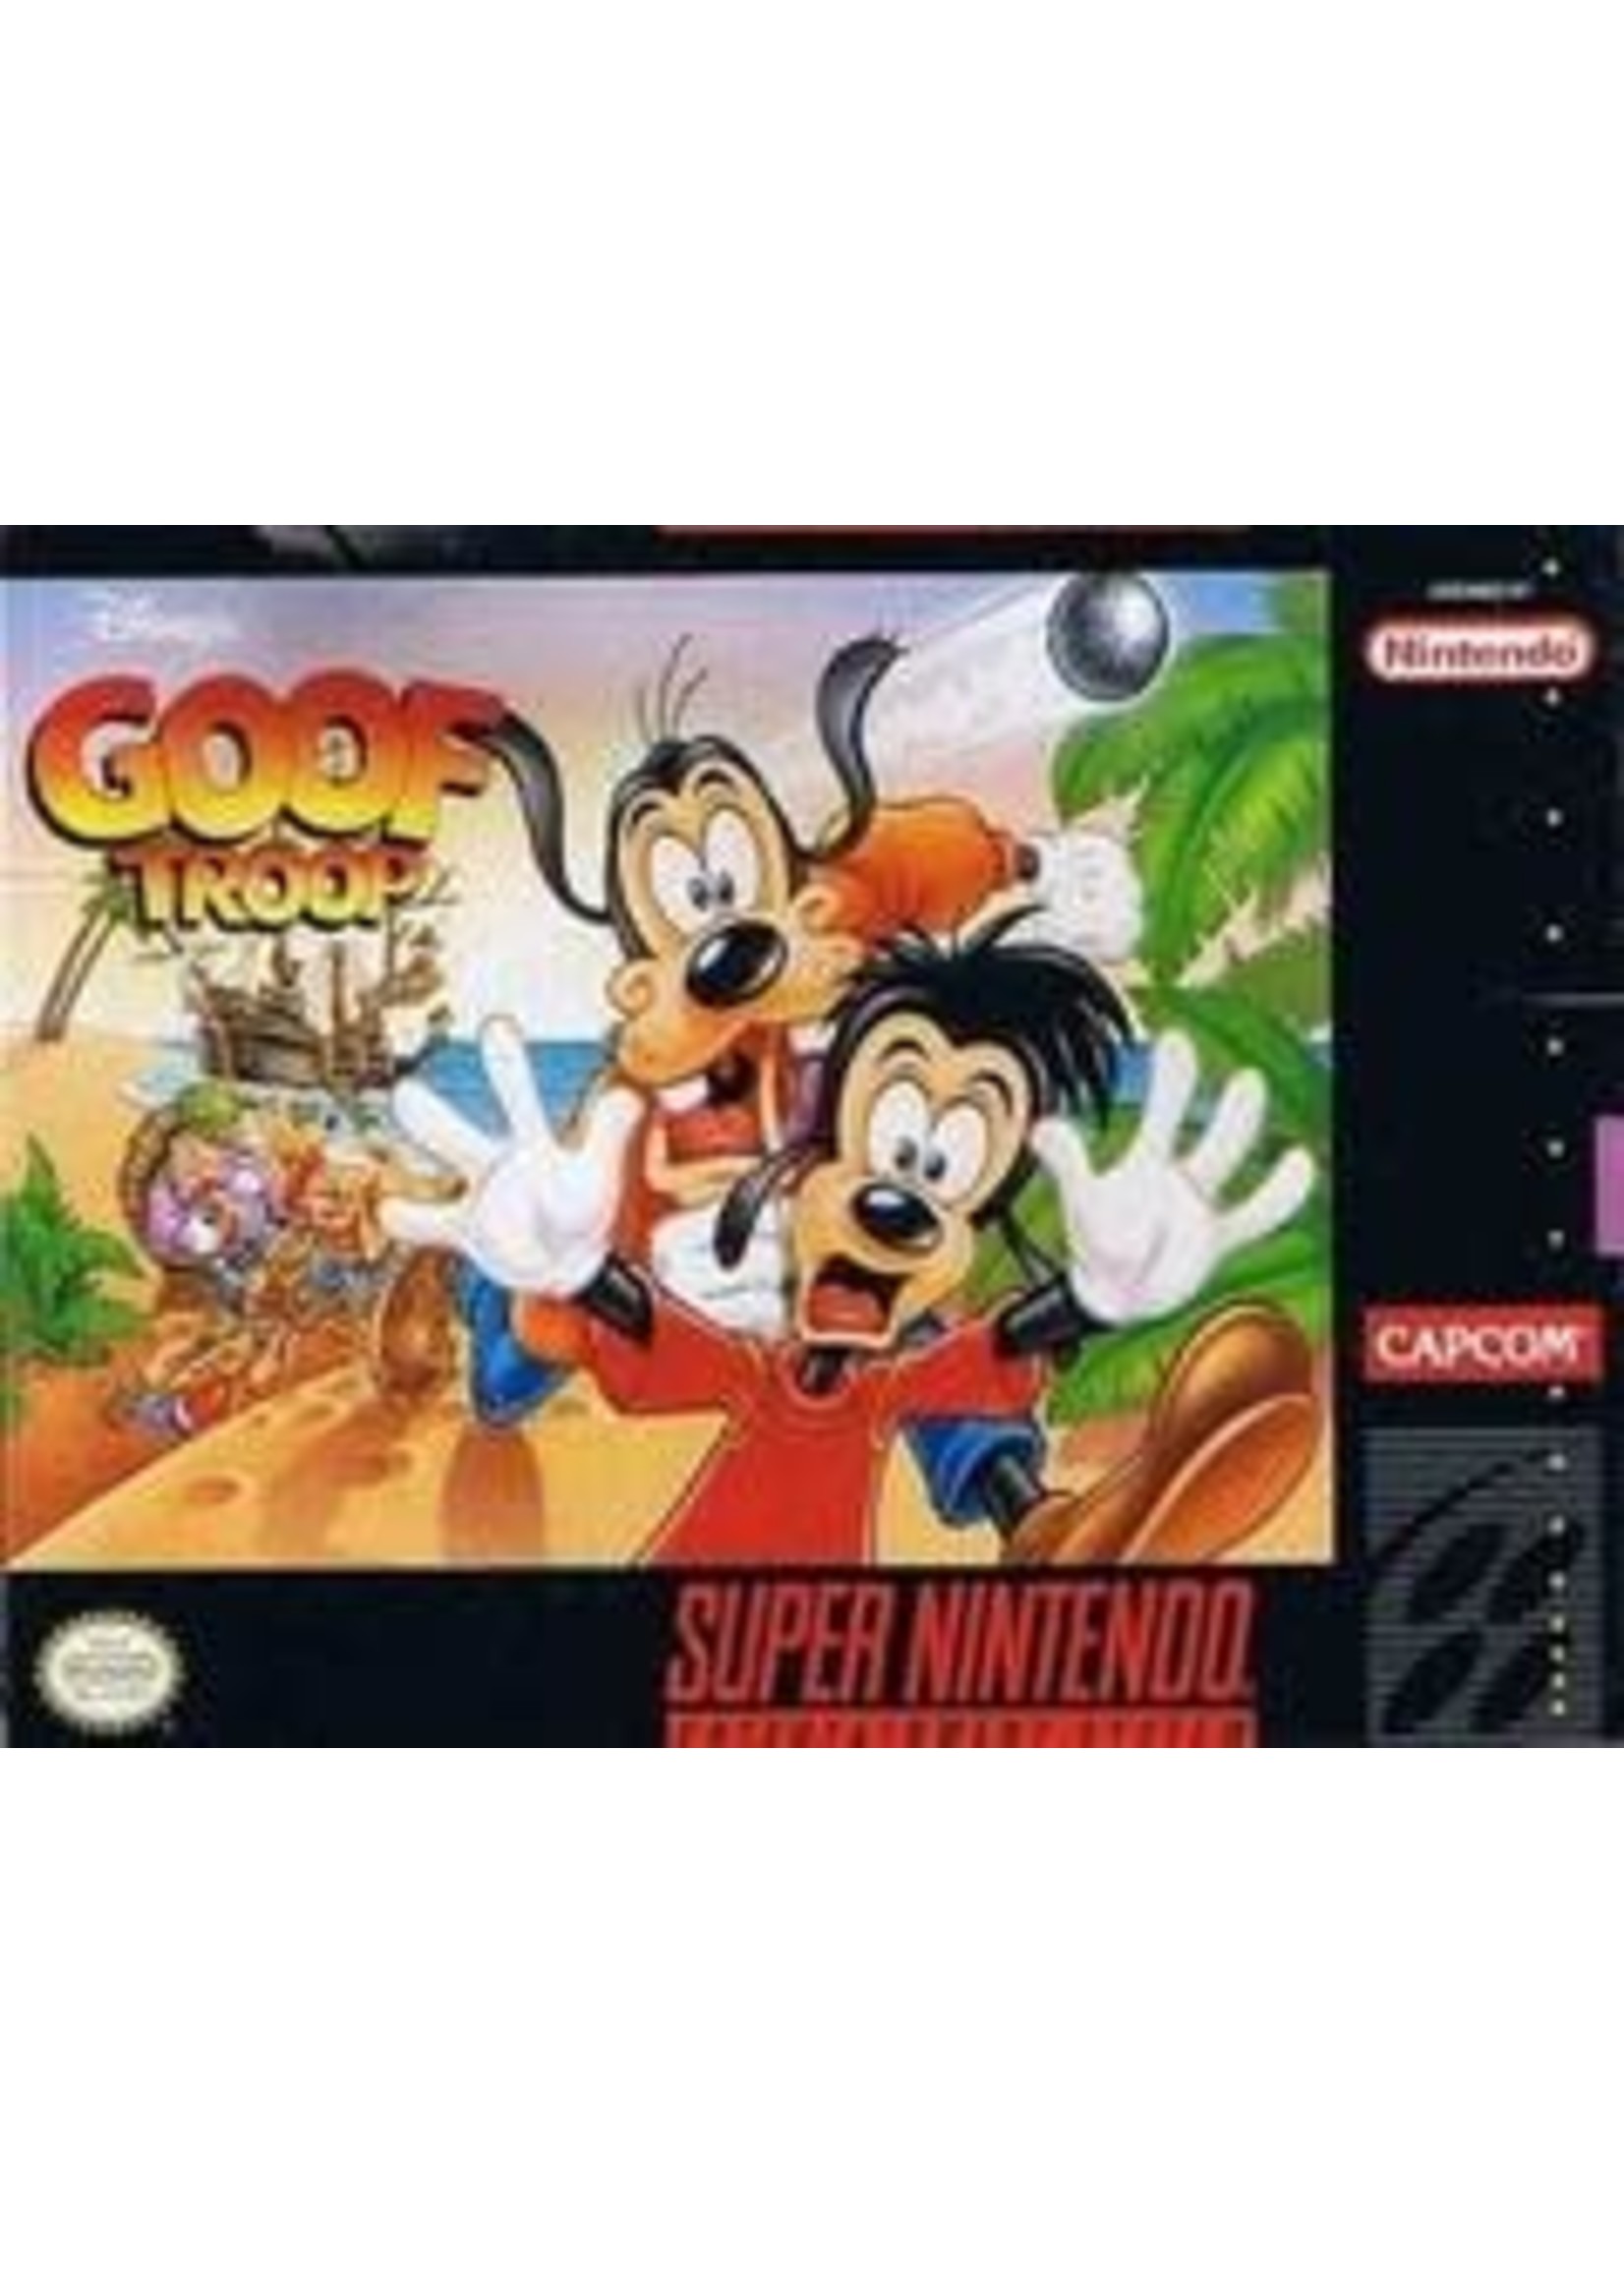 Goof Troop Super Nintendo CART ONLY